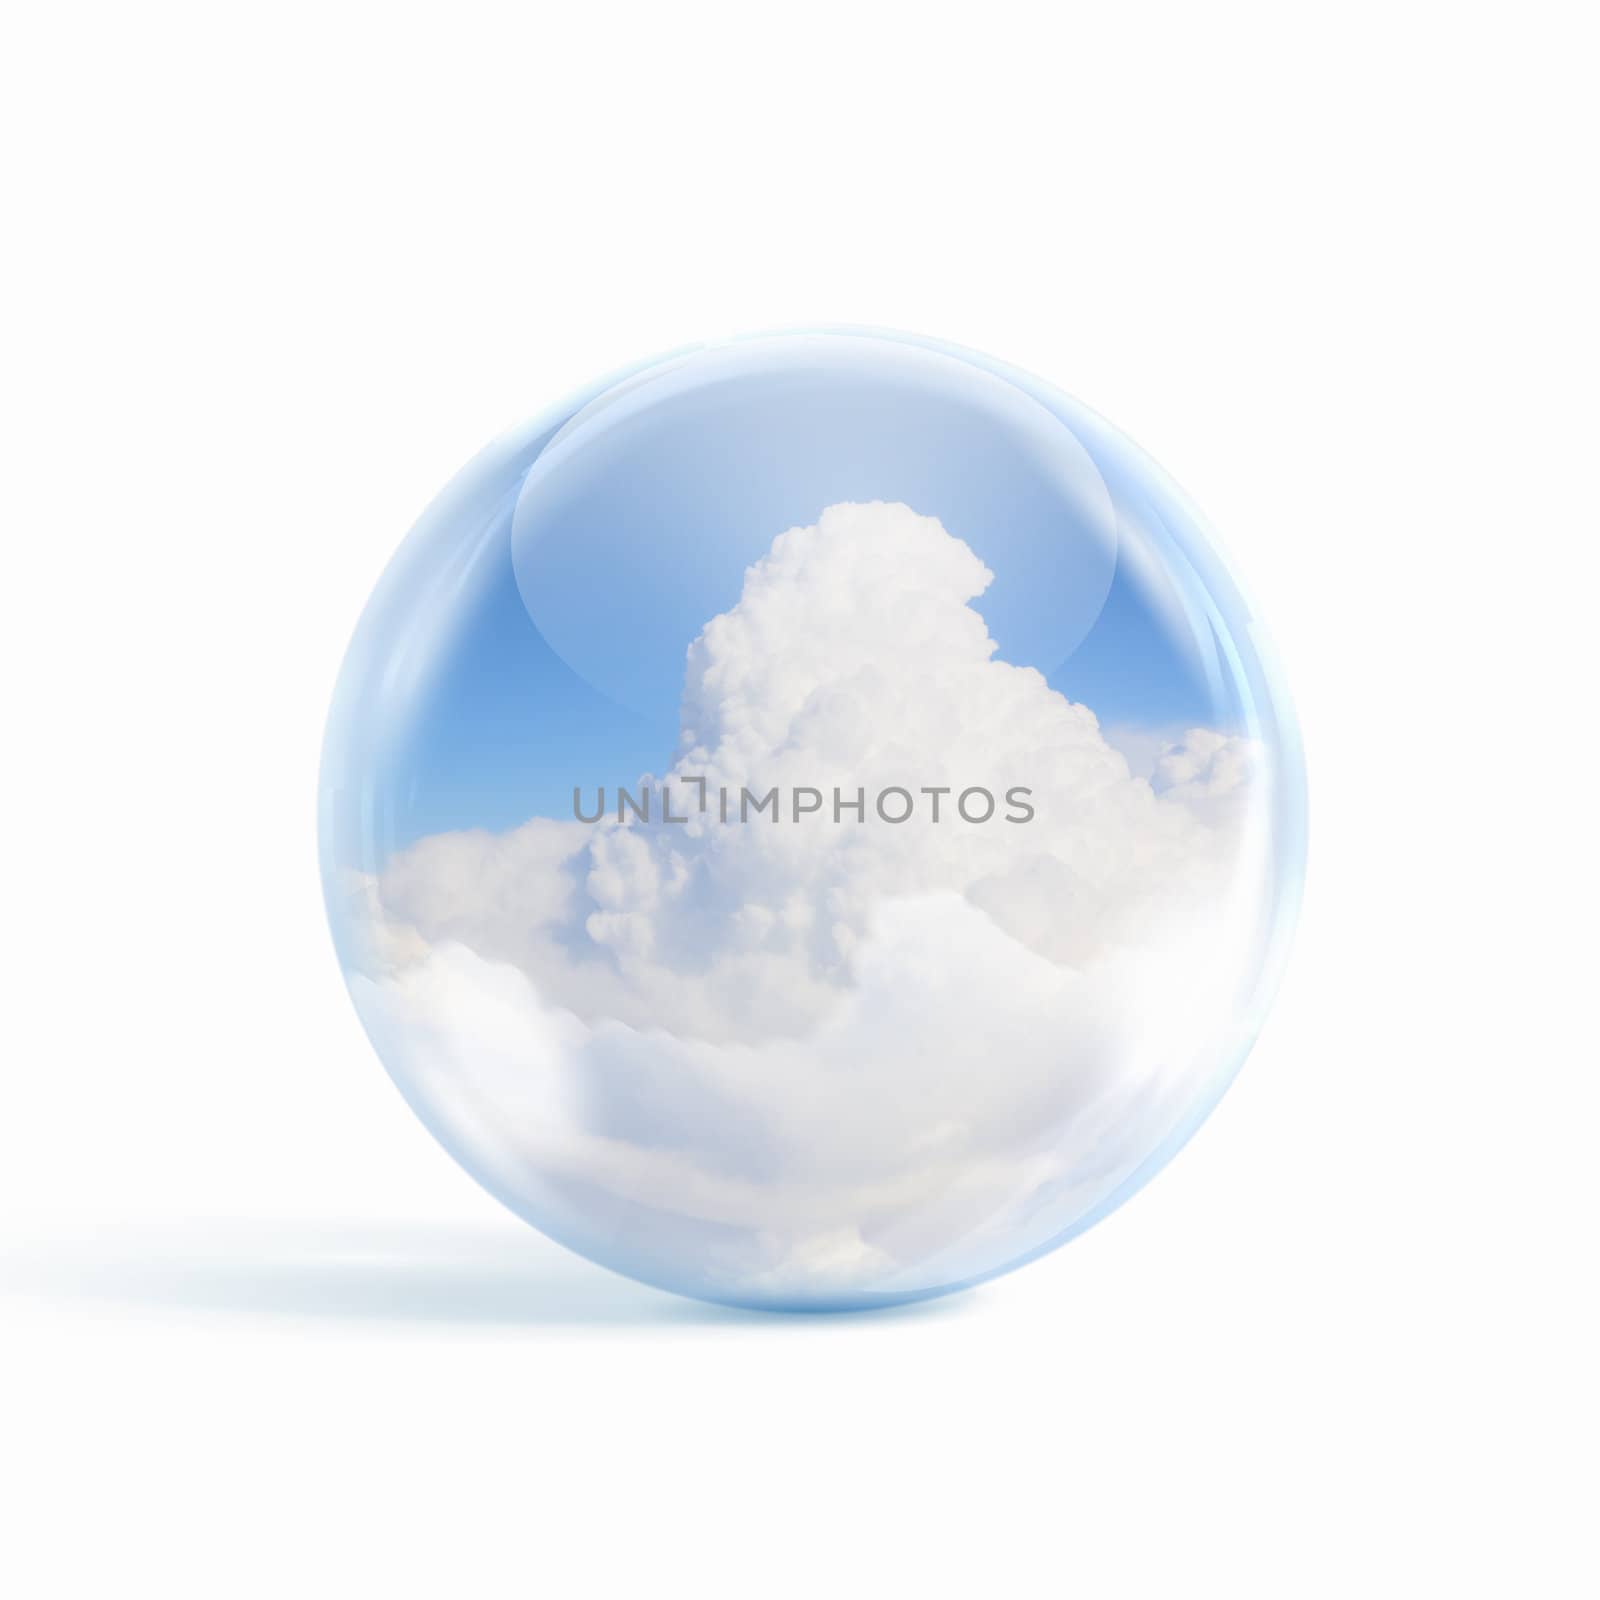 White clouds in blue sky inside a glass sphere